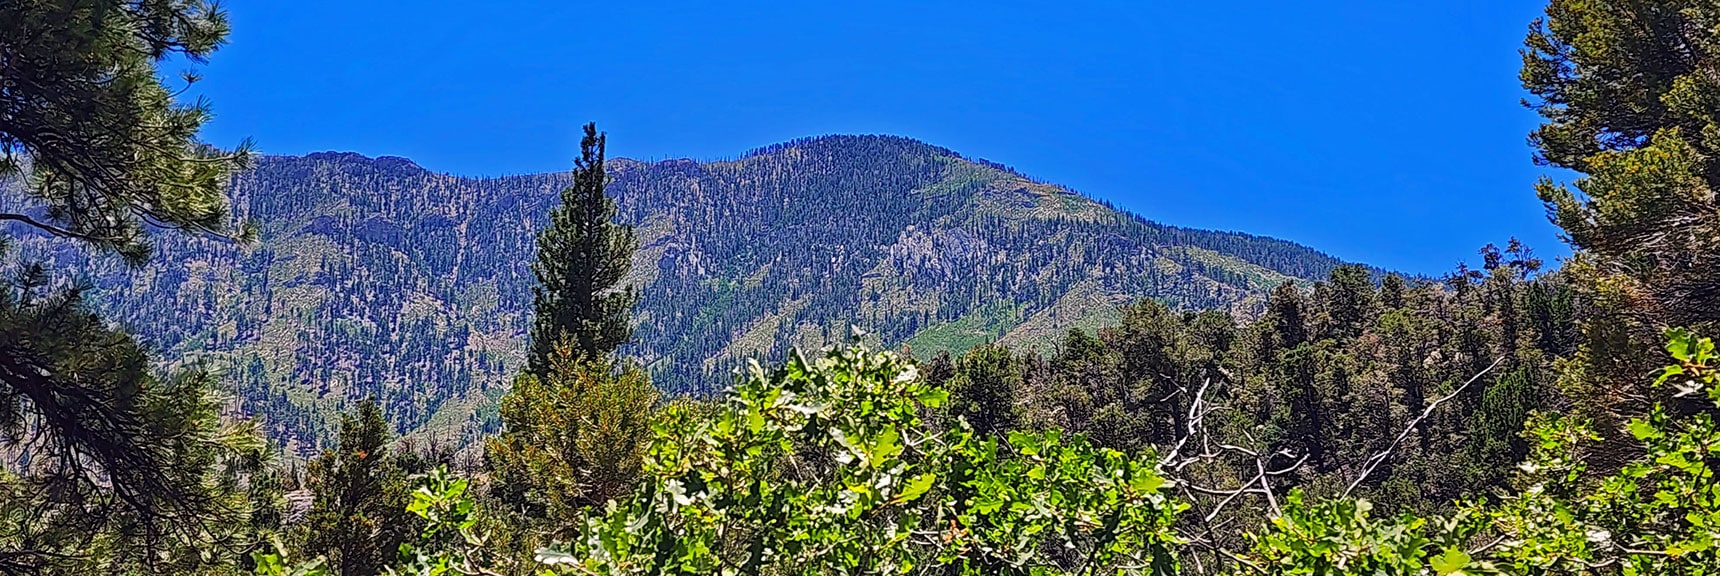 Harris Mountain From Lower Fletcher Canyon | Fletcher Canyon / Fletcher Peak / Cockscomb Ridge Circuit | Mt. Charleston Wilderness | Spring Mountains, Nevada